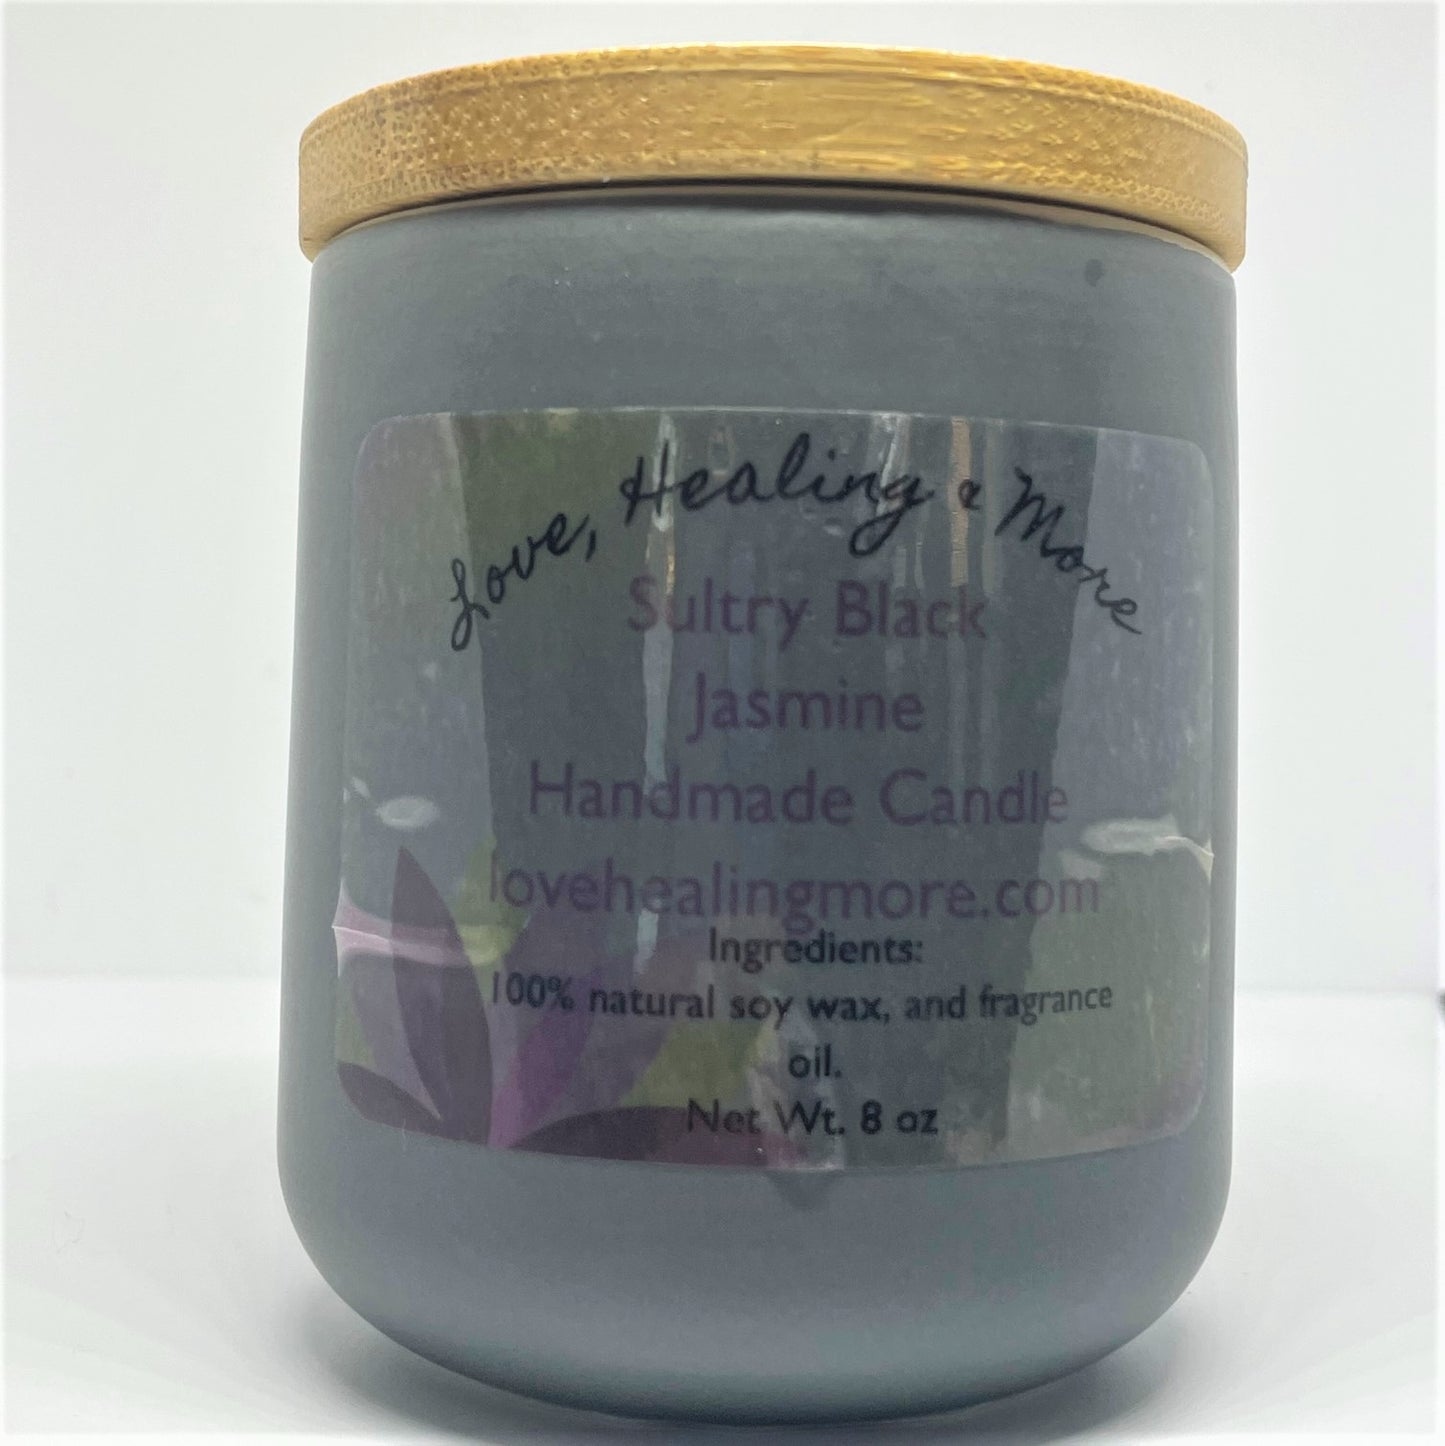 Handmade Sultry Black Jasmine Fragrance Candle